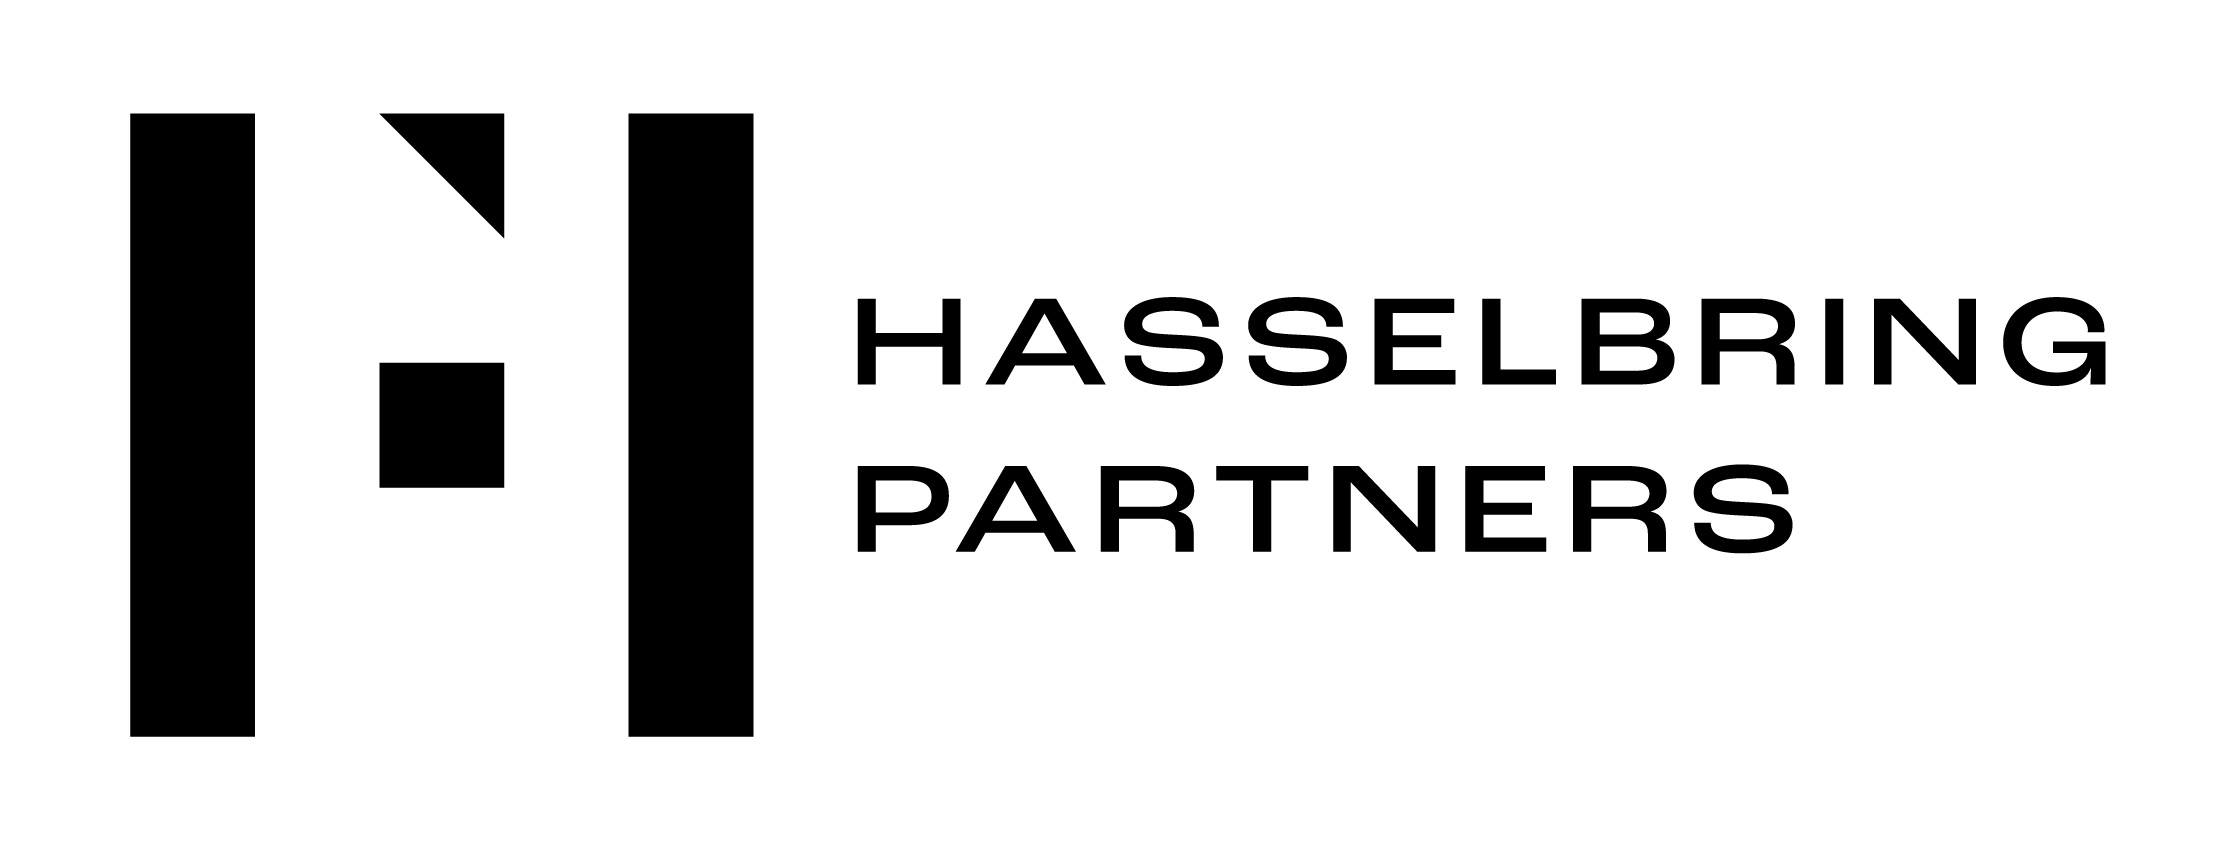 Hasselbring Partners_Logo_Hori_black.jpg